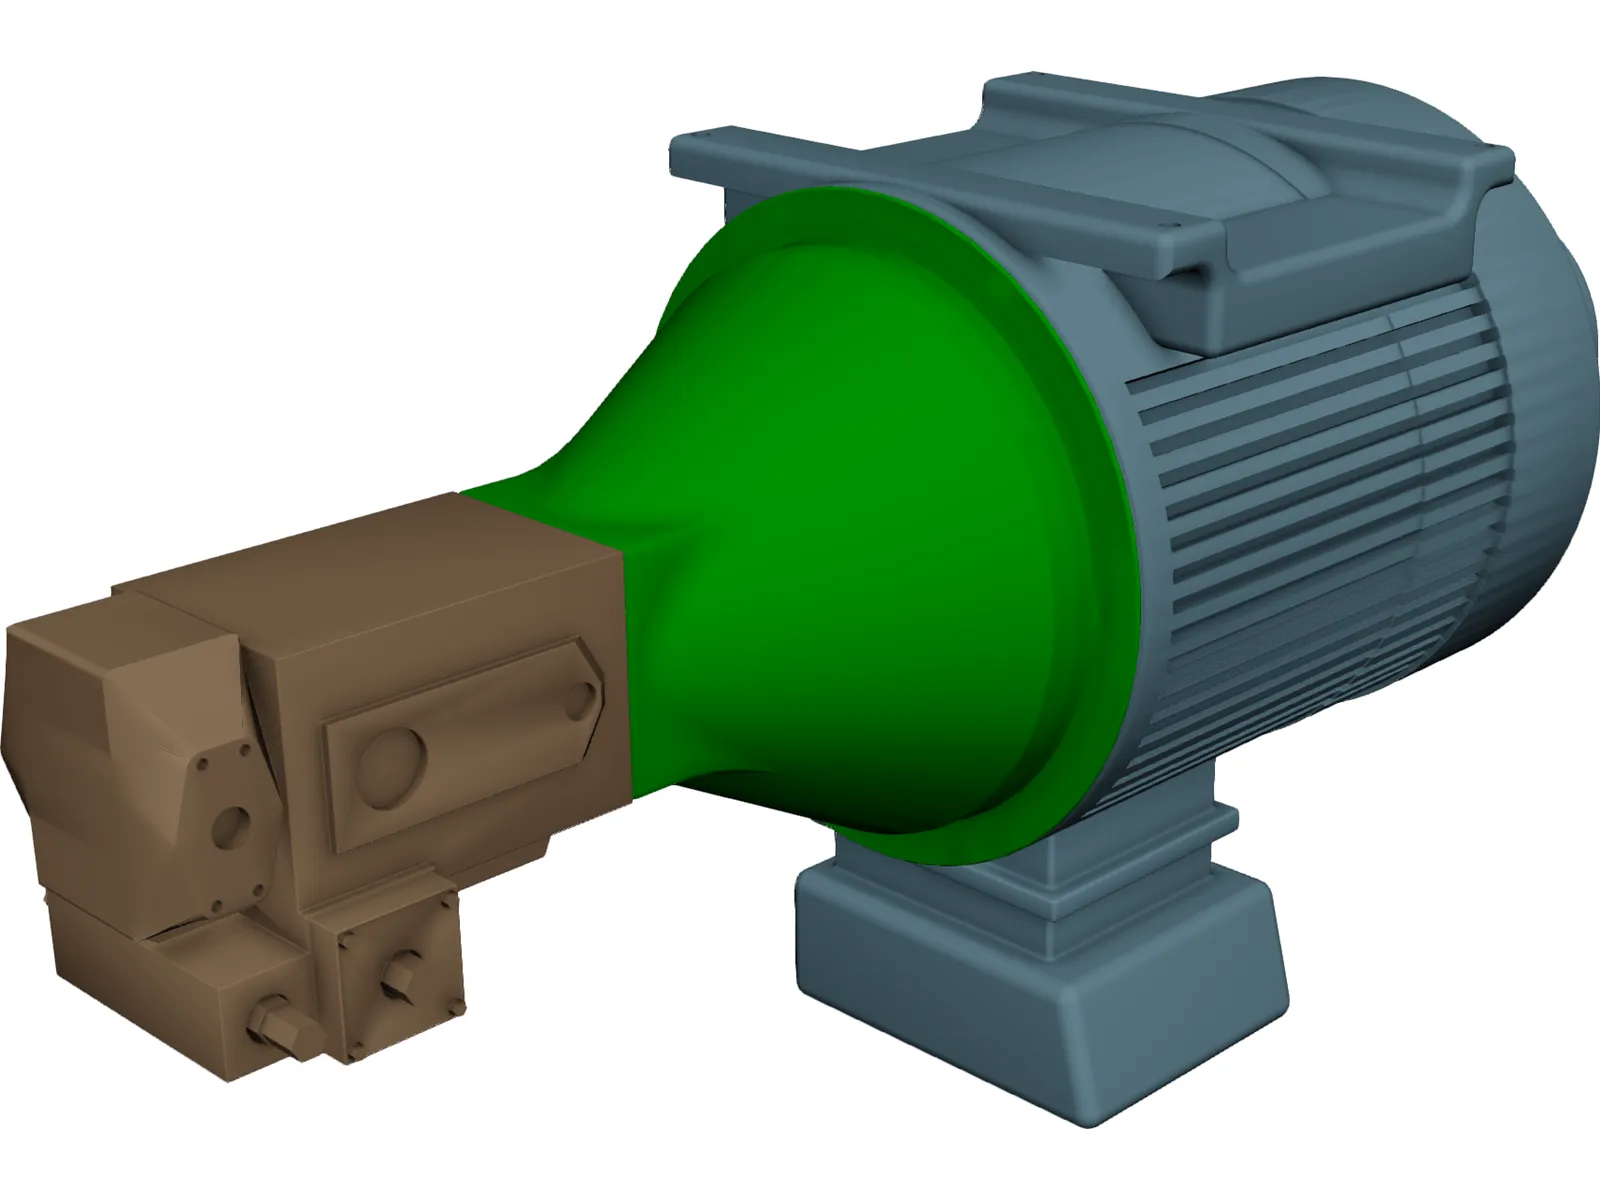 Motor Bellhousing Coupling Pump 3D Model